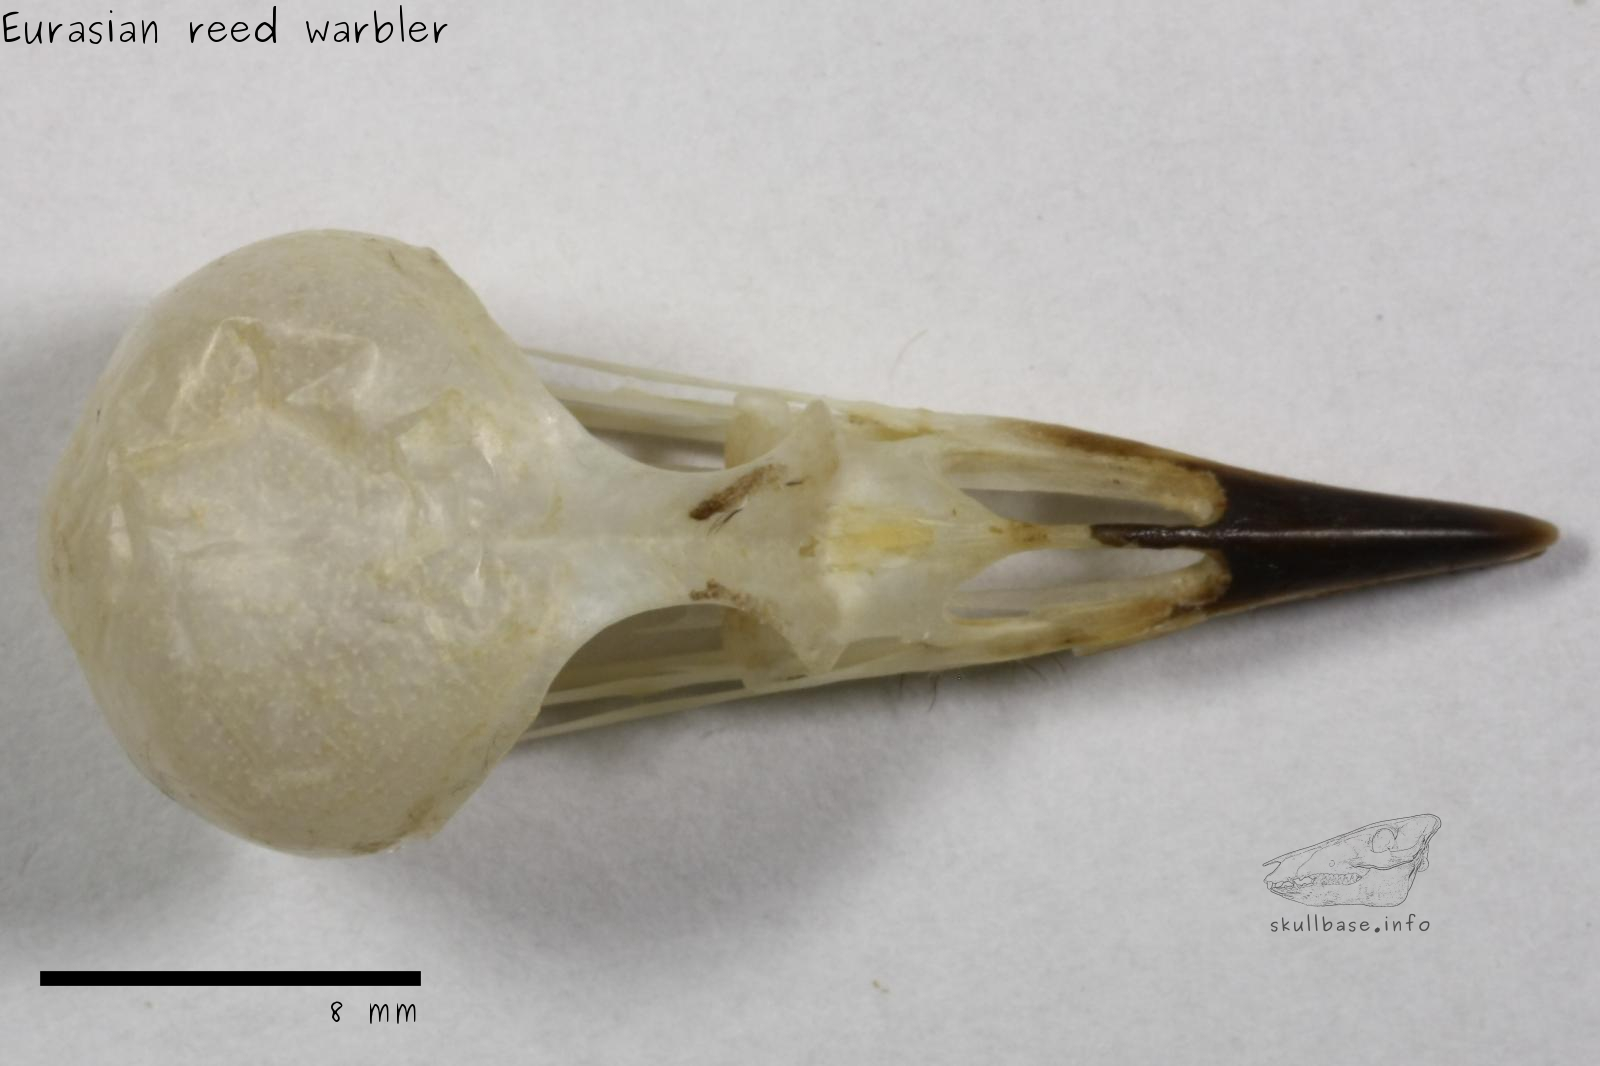 Eurasian reed warbler (Acrocephalus scirpaceus) skull dorsal view